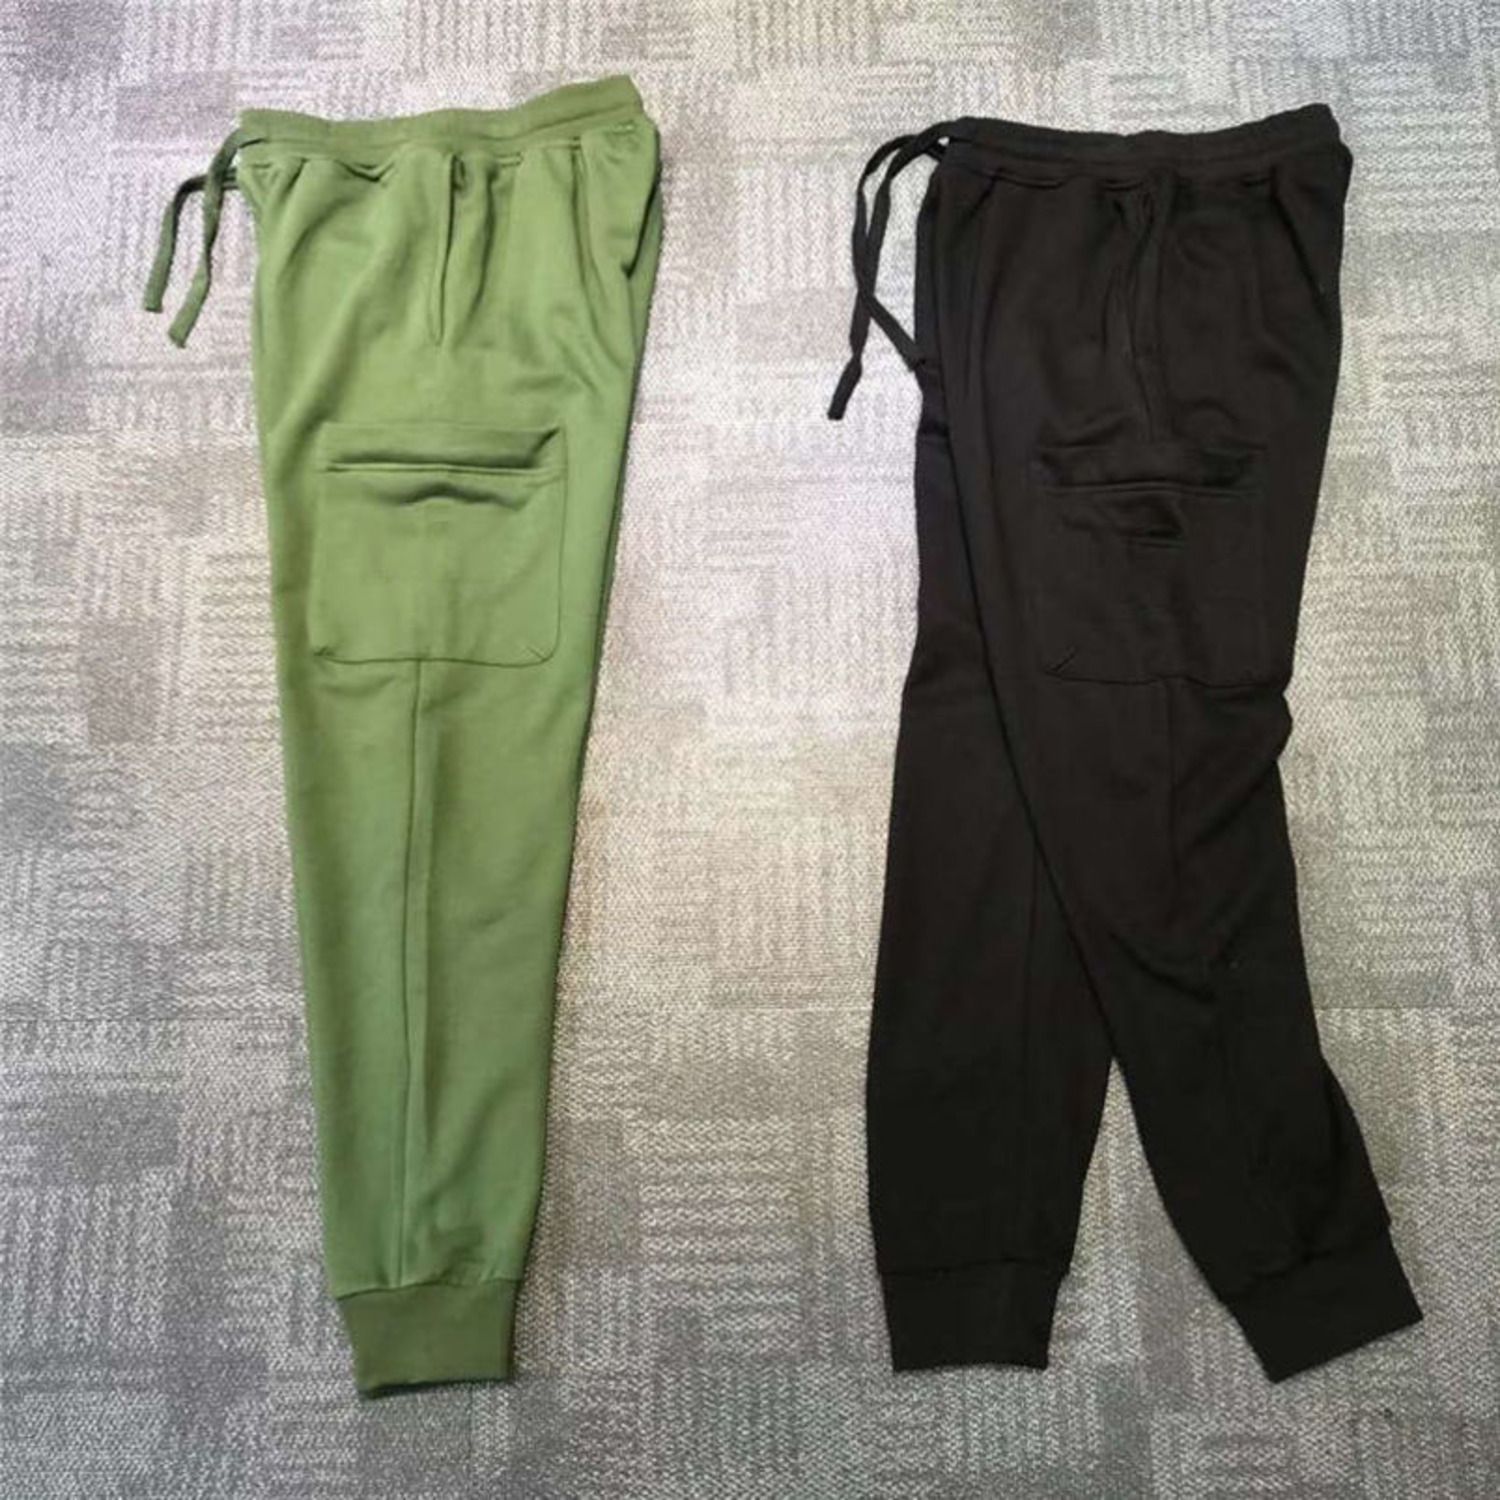 Sumen Men Sweatpants Slacks Casual Elastic Joggings Sport Solid Baggy Pockets Trousers,4 Colors